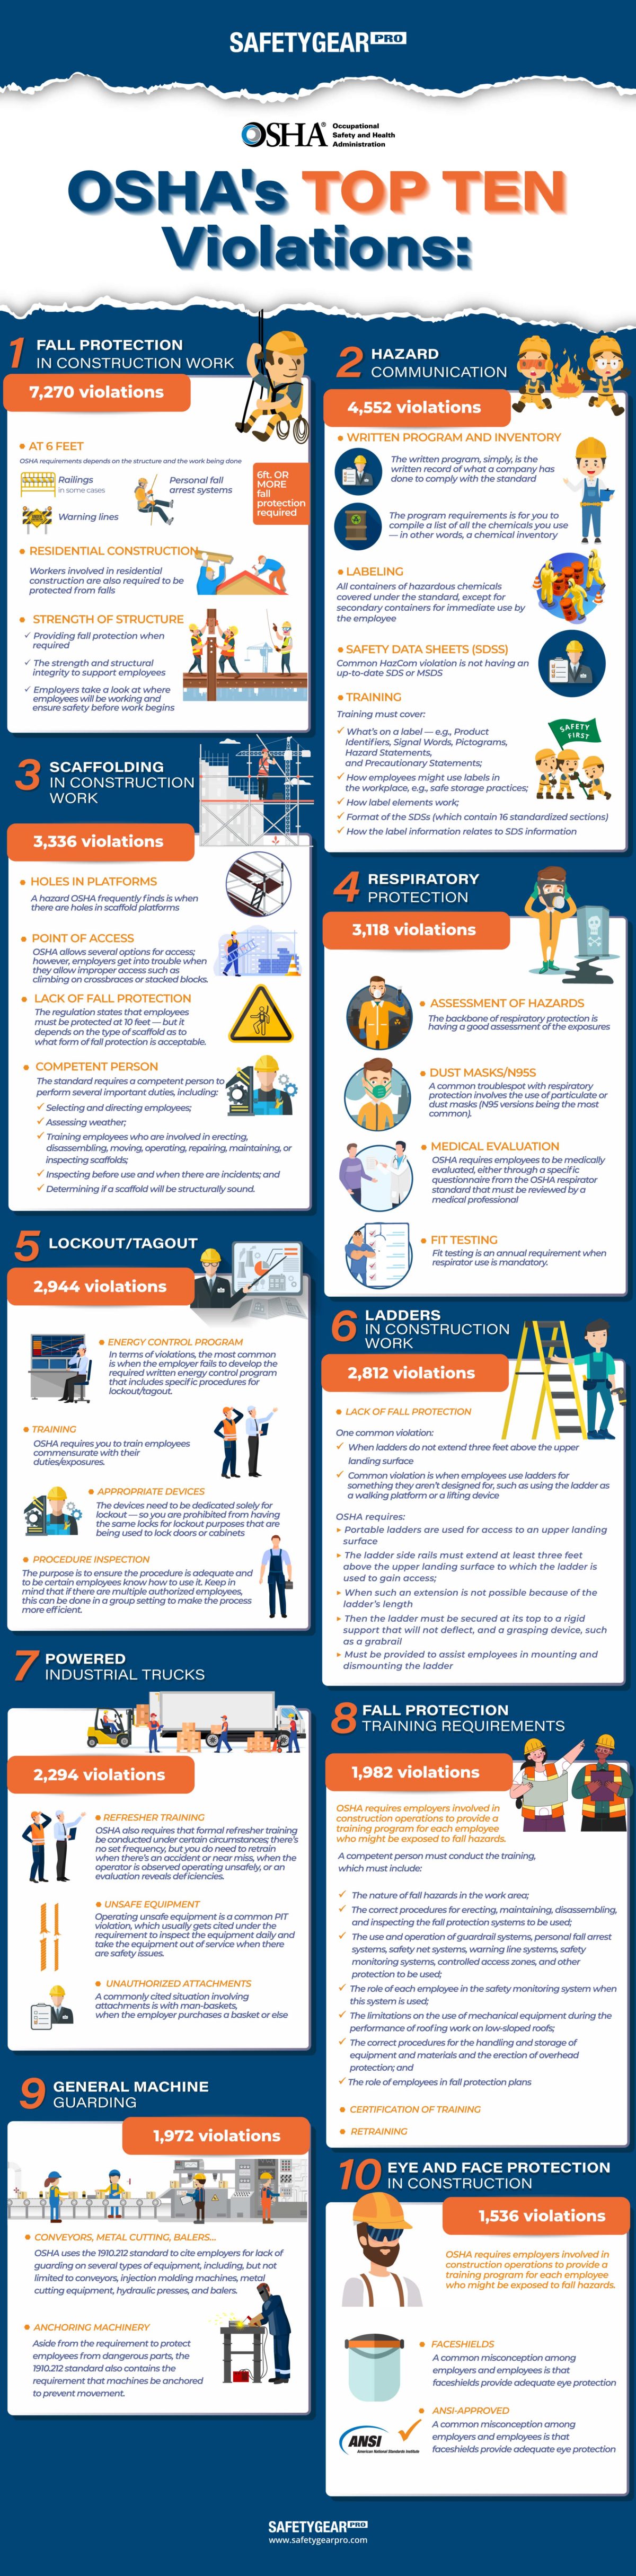 Top 10 Most Common OSHA Violations Infographic